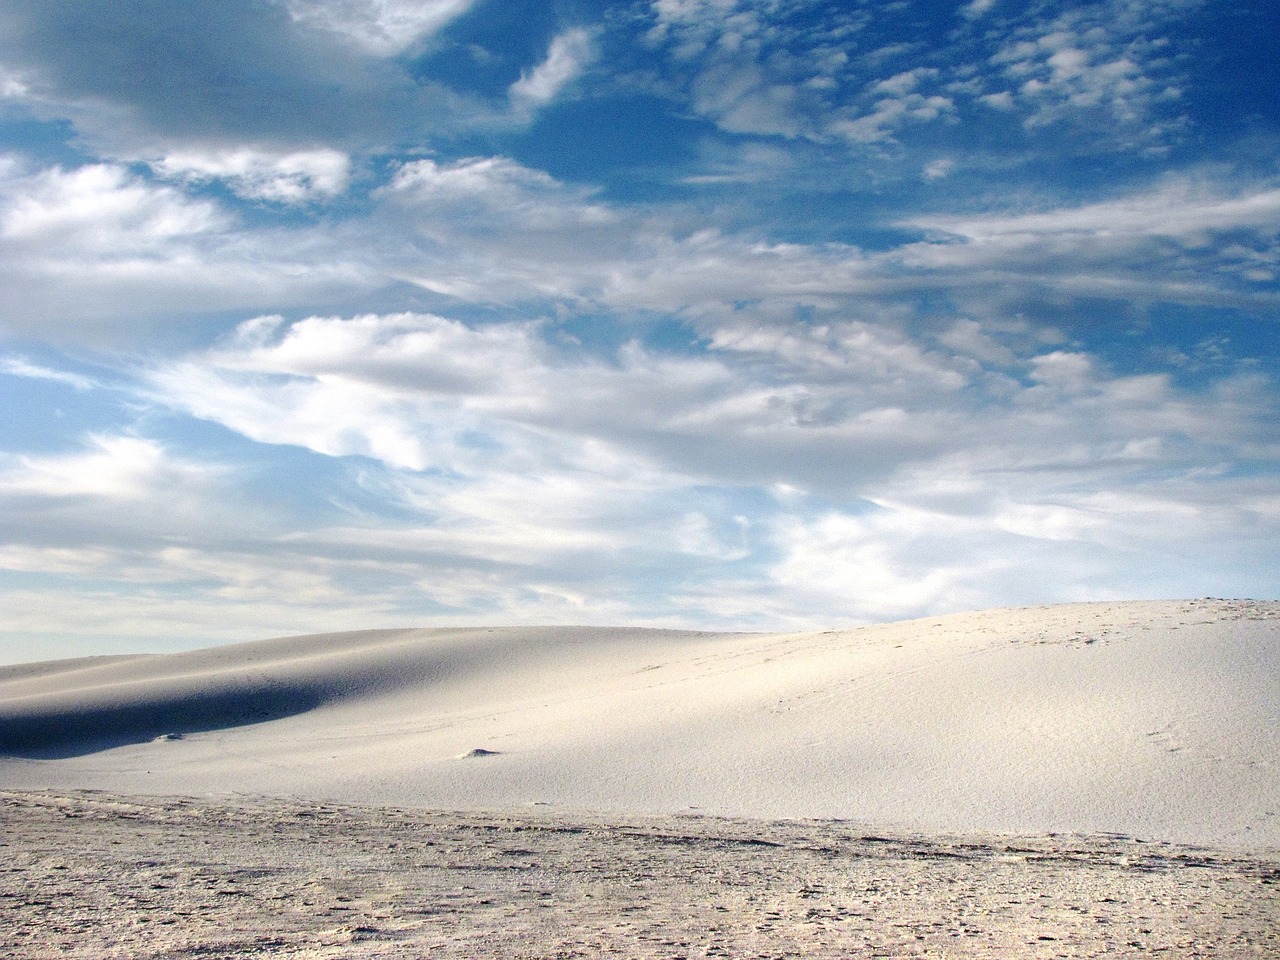 White sand dune with blue sky in desert 8070348 Stock Photo at Vecteezy